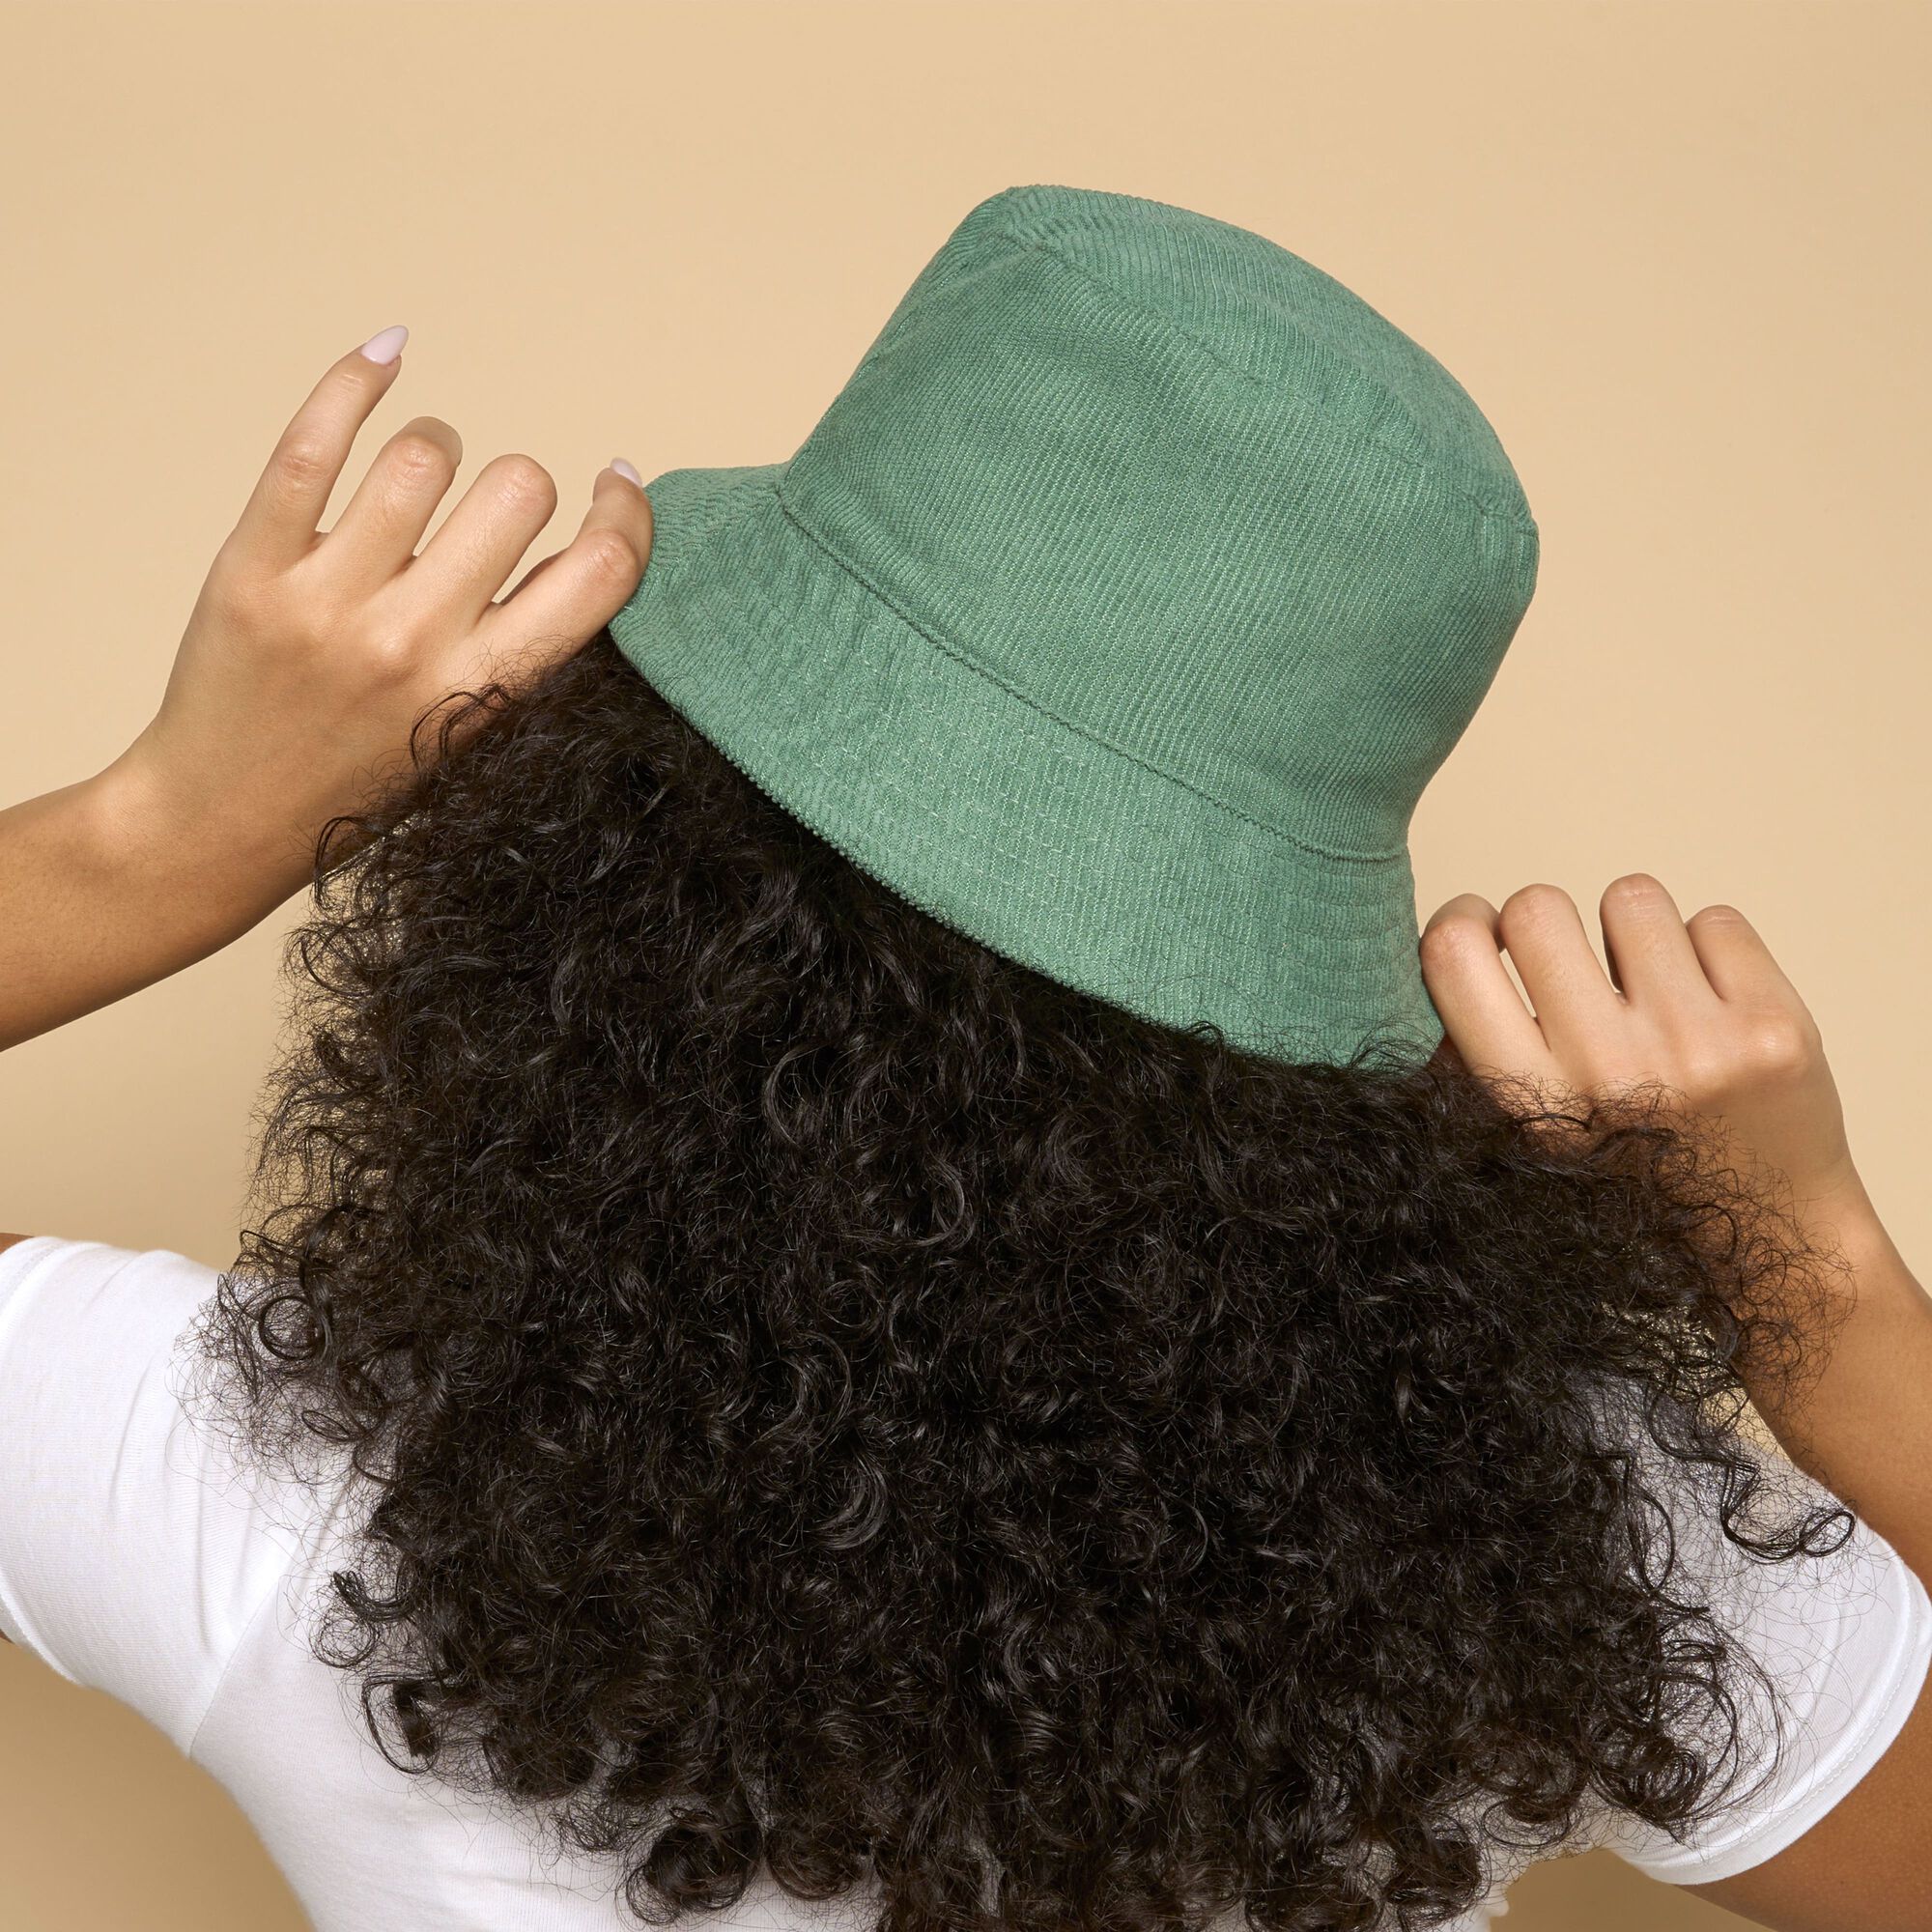 Conscious Bucket Hat, Green